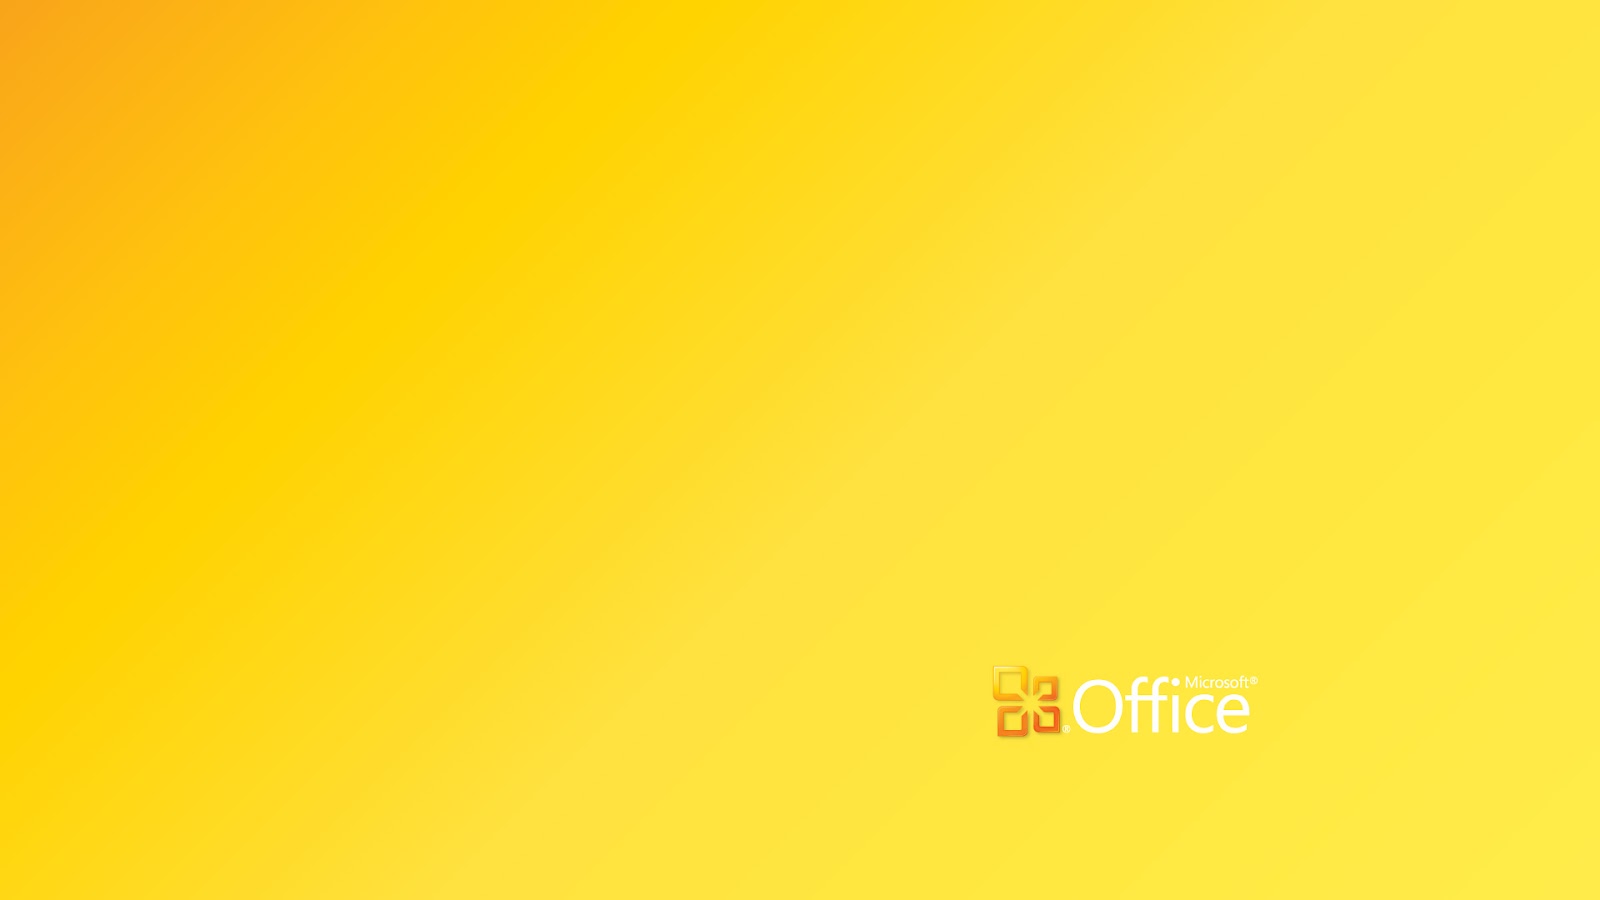 Microsoft Office Wallpaper 11 - [1600x900]